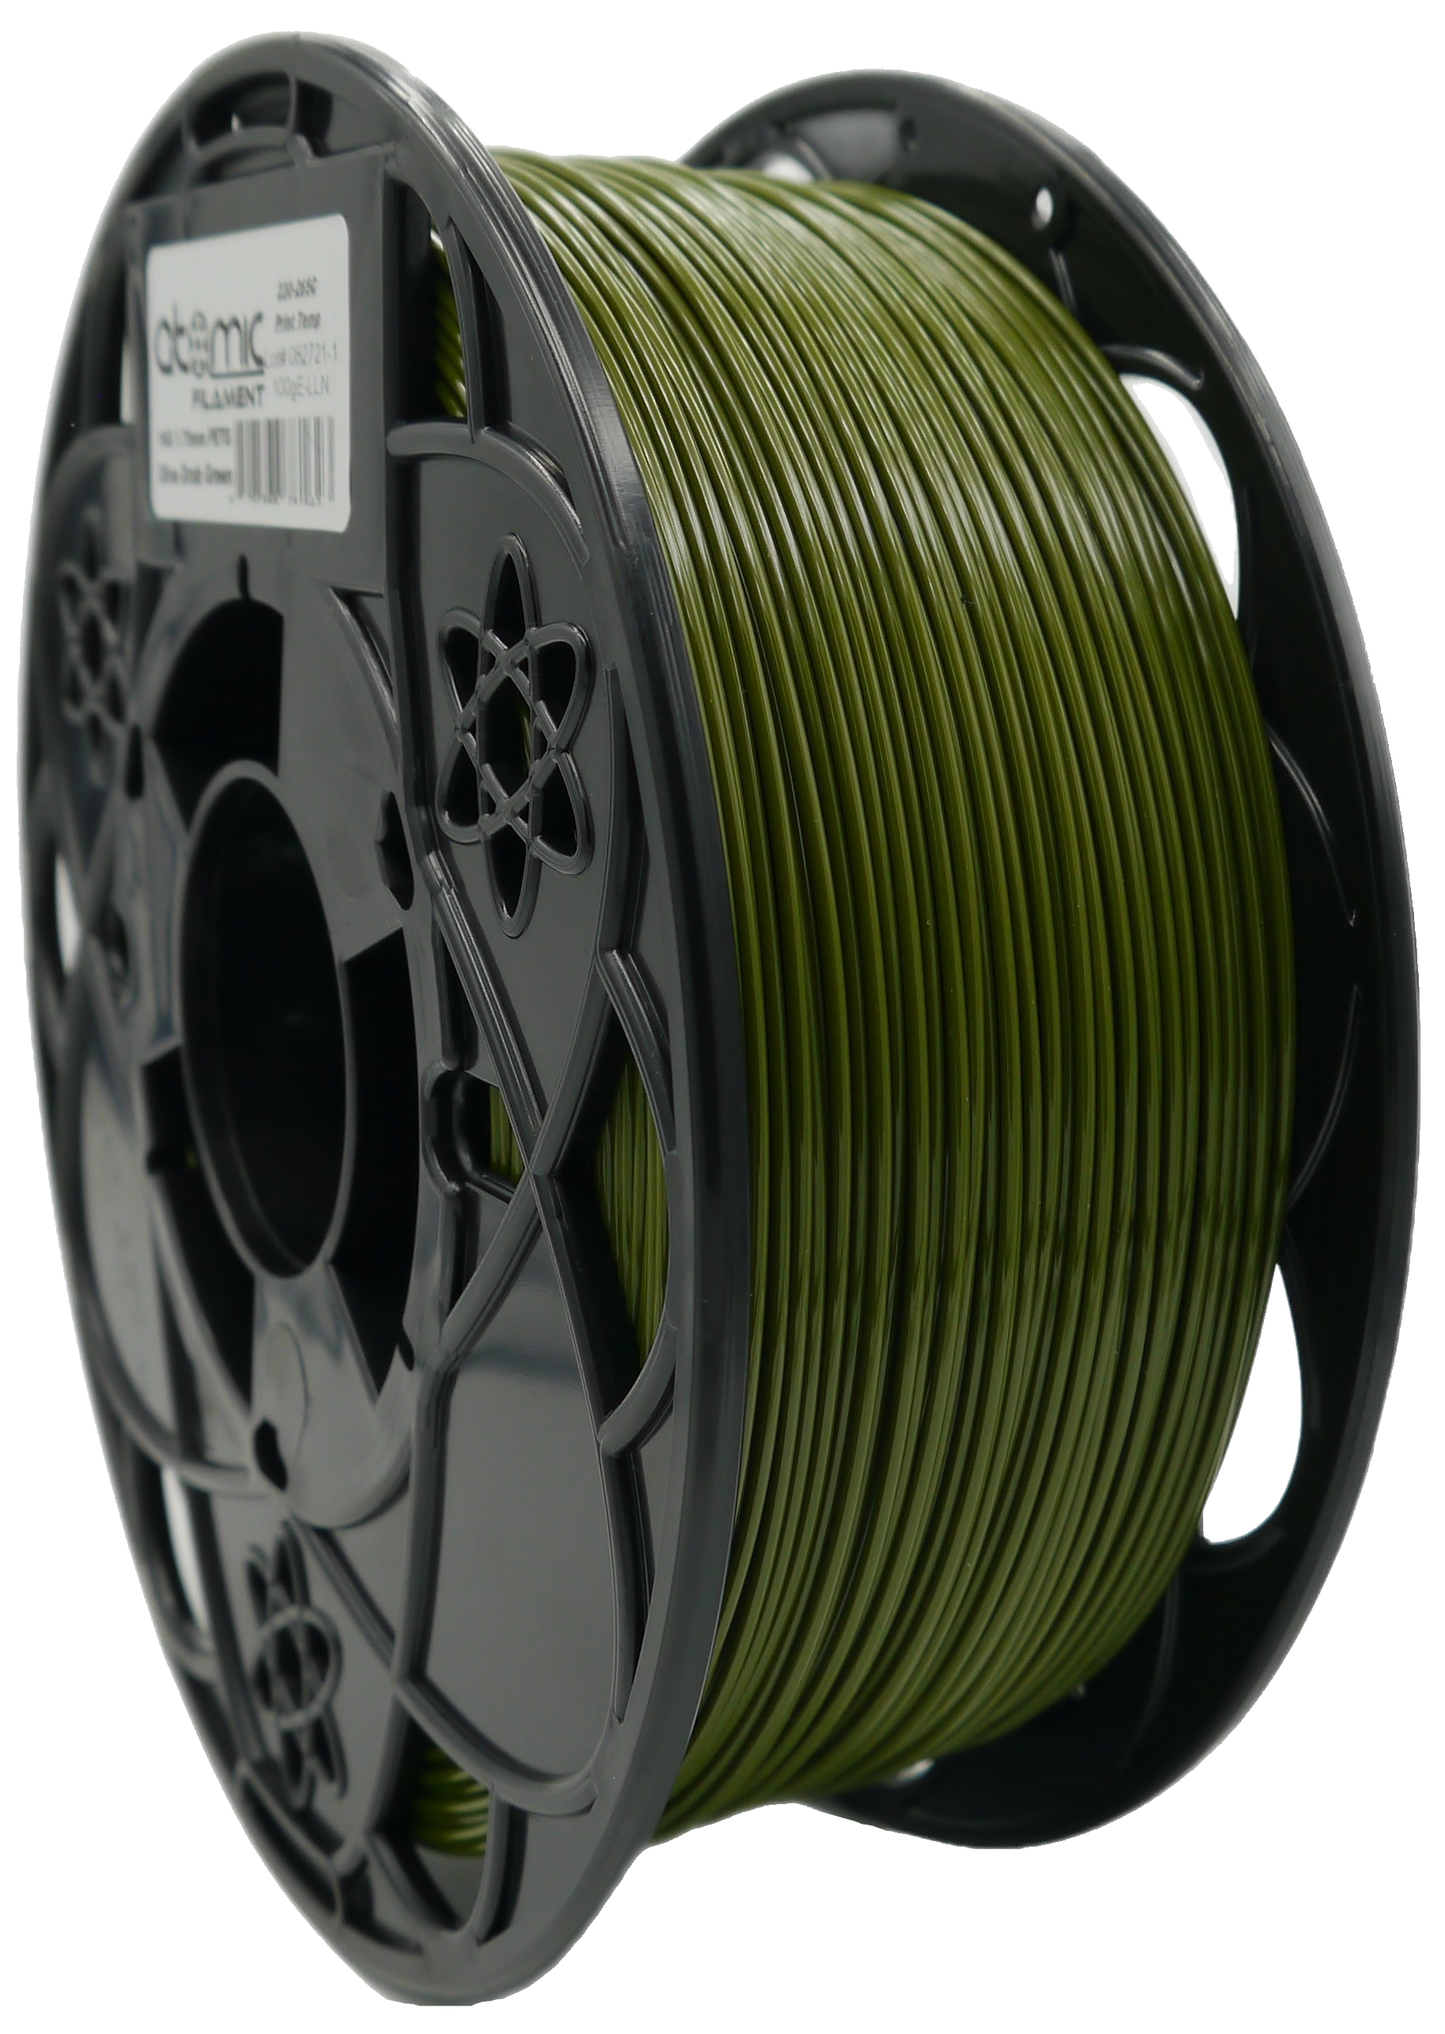 3.5KG Olive Drab Green PETG PRO Filament